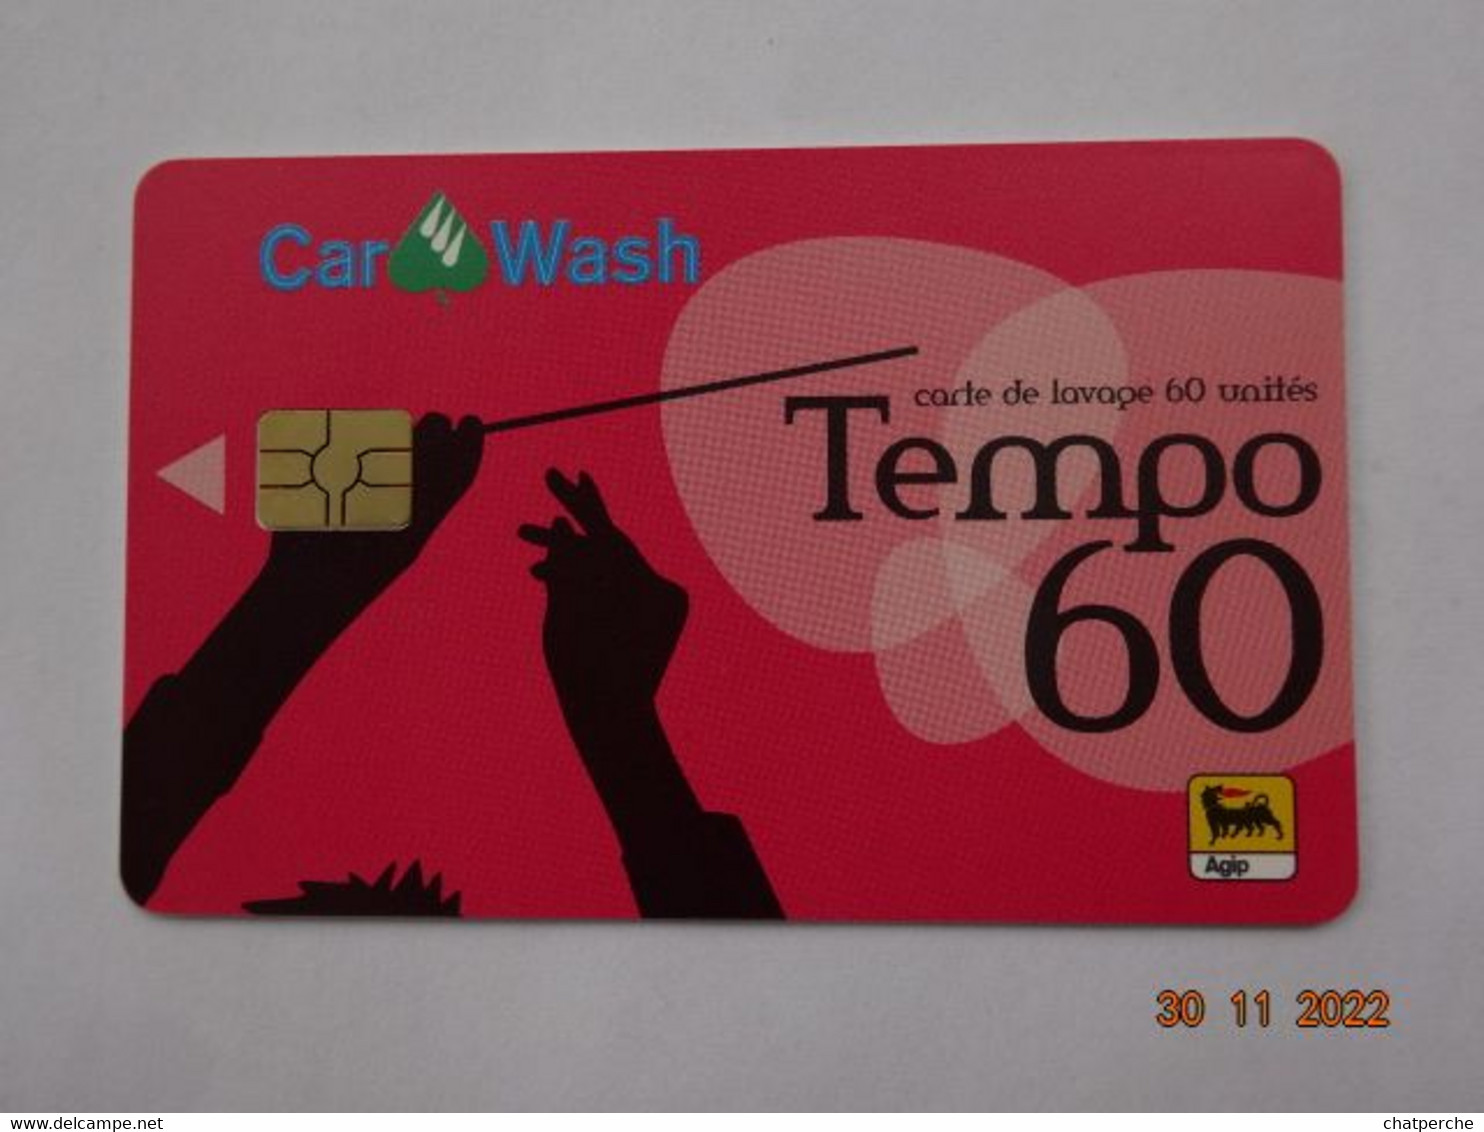 LAVAGE AUTO CARTE A PUCE CHIP CARD CARTE WASH TEMPO 60 AGIP - Car Wash Cards